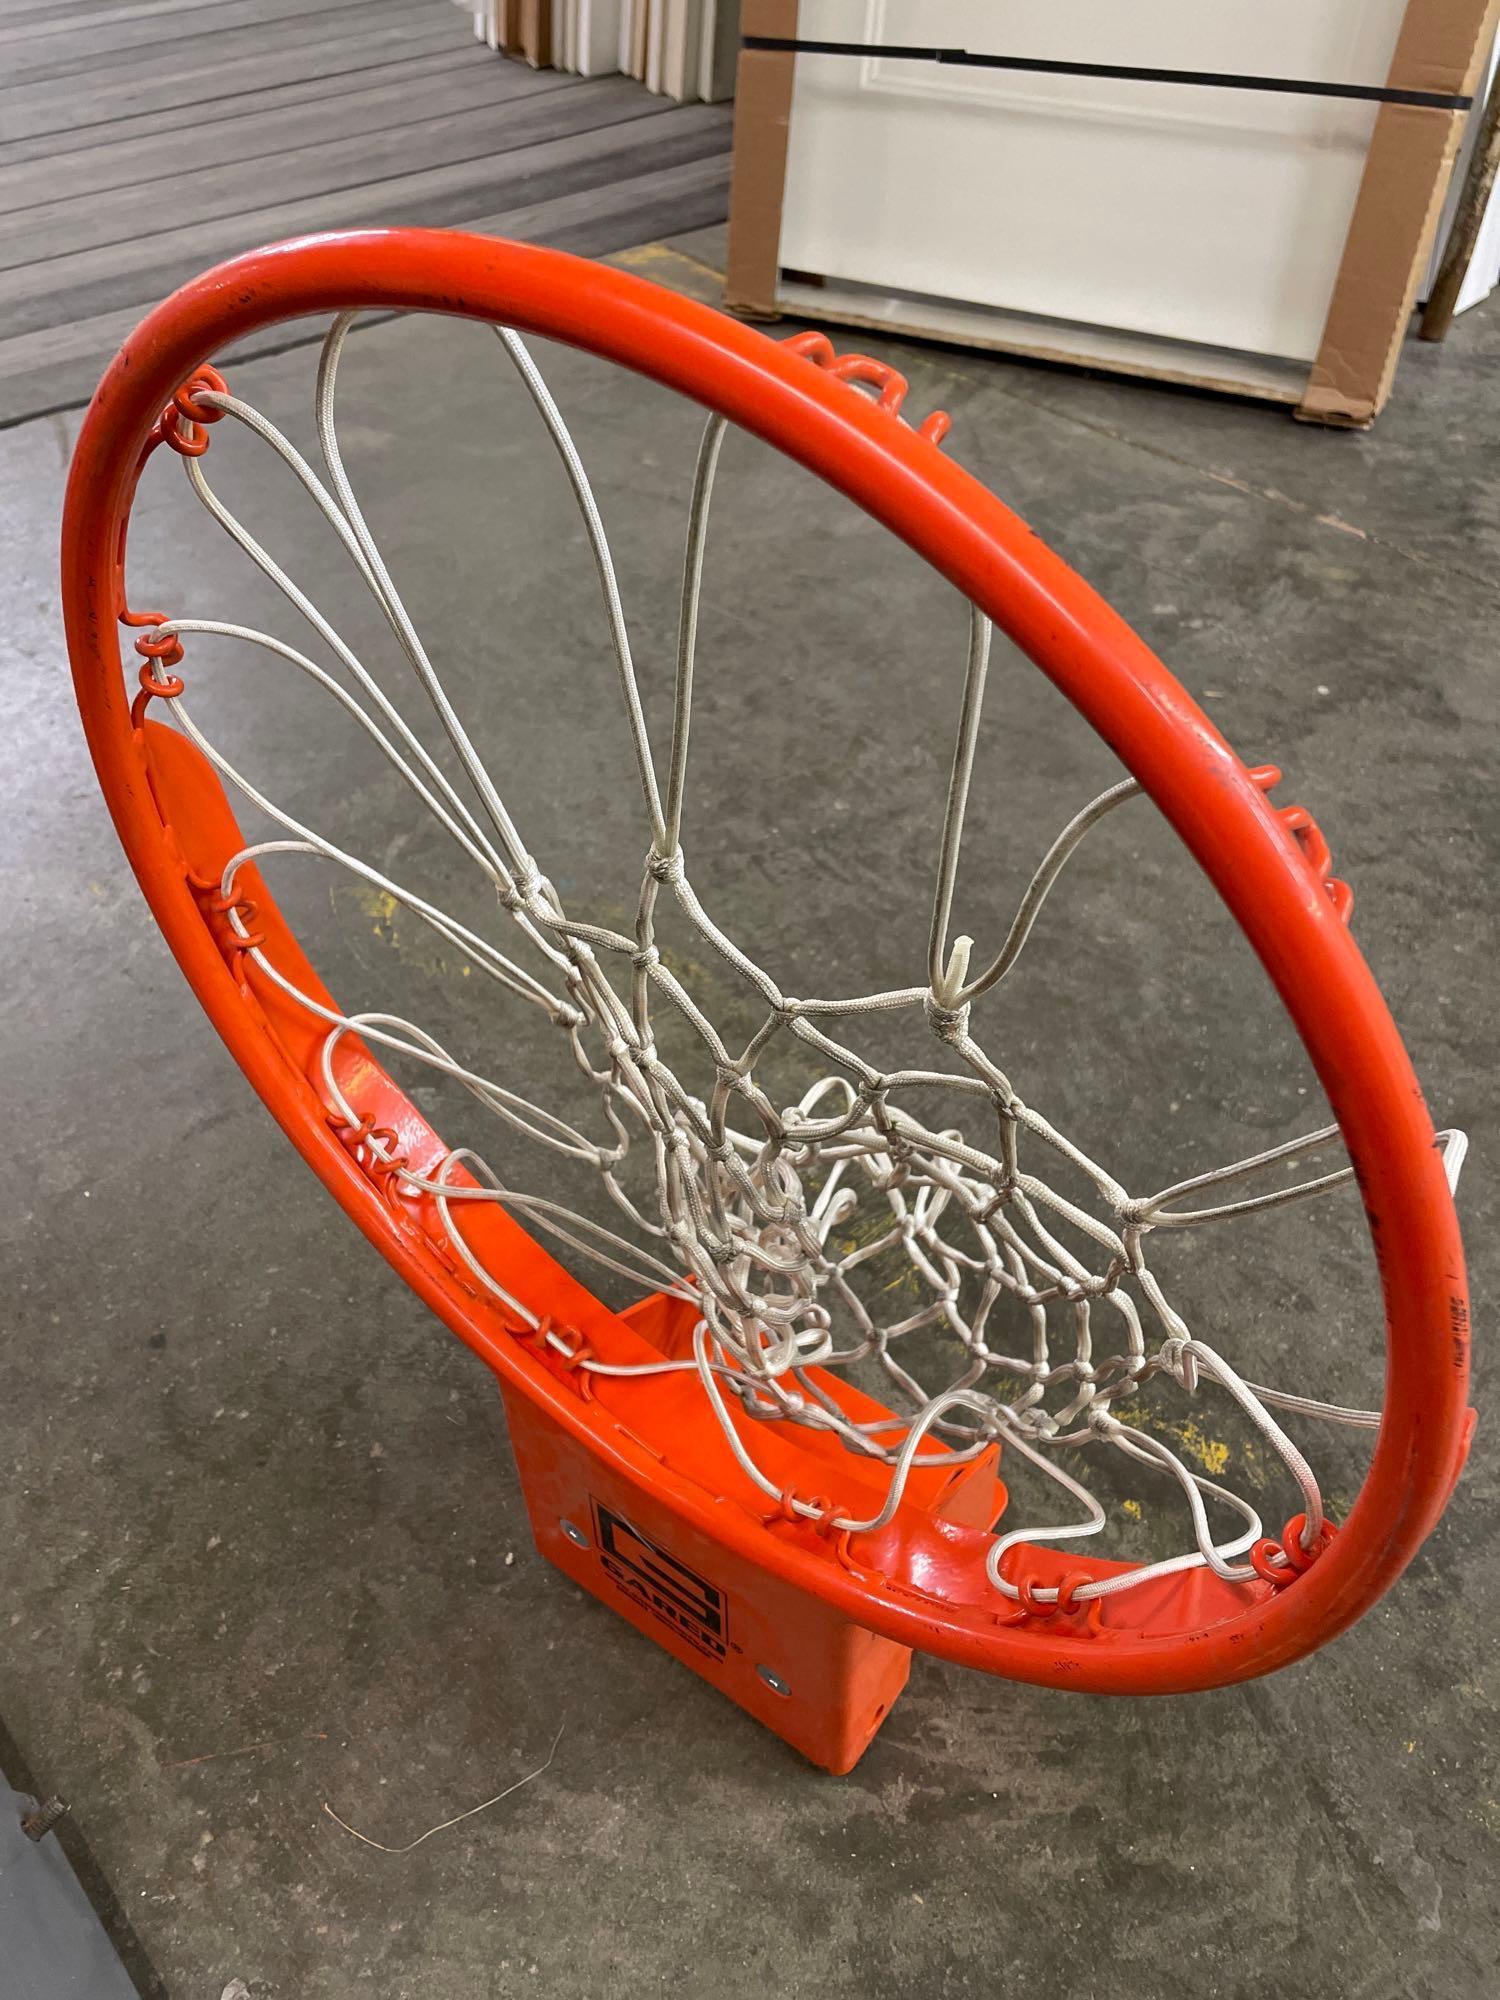 Gared commercial/regulation Basketball hoop 6?x42?